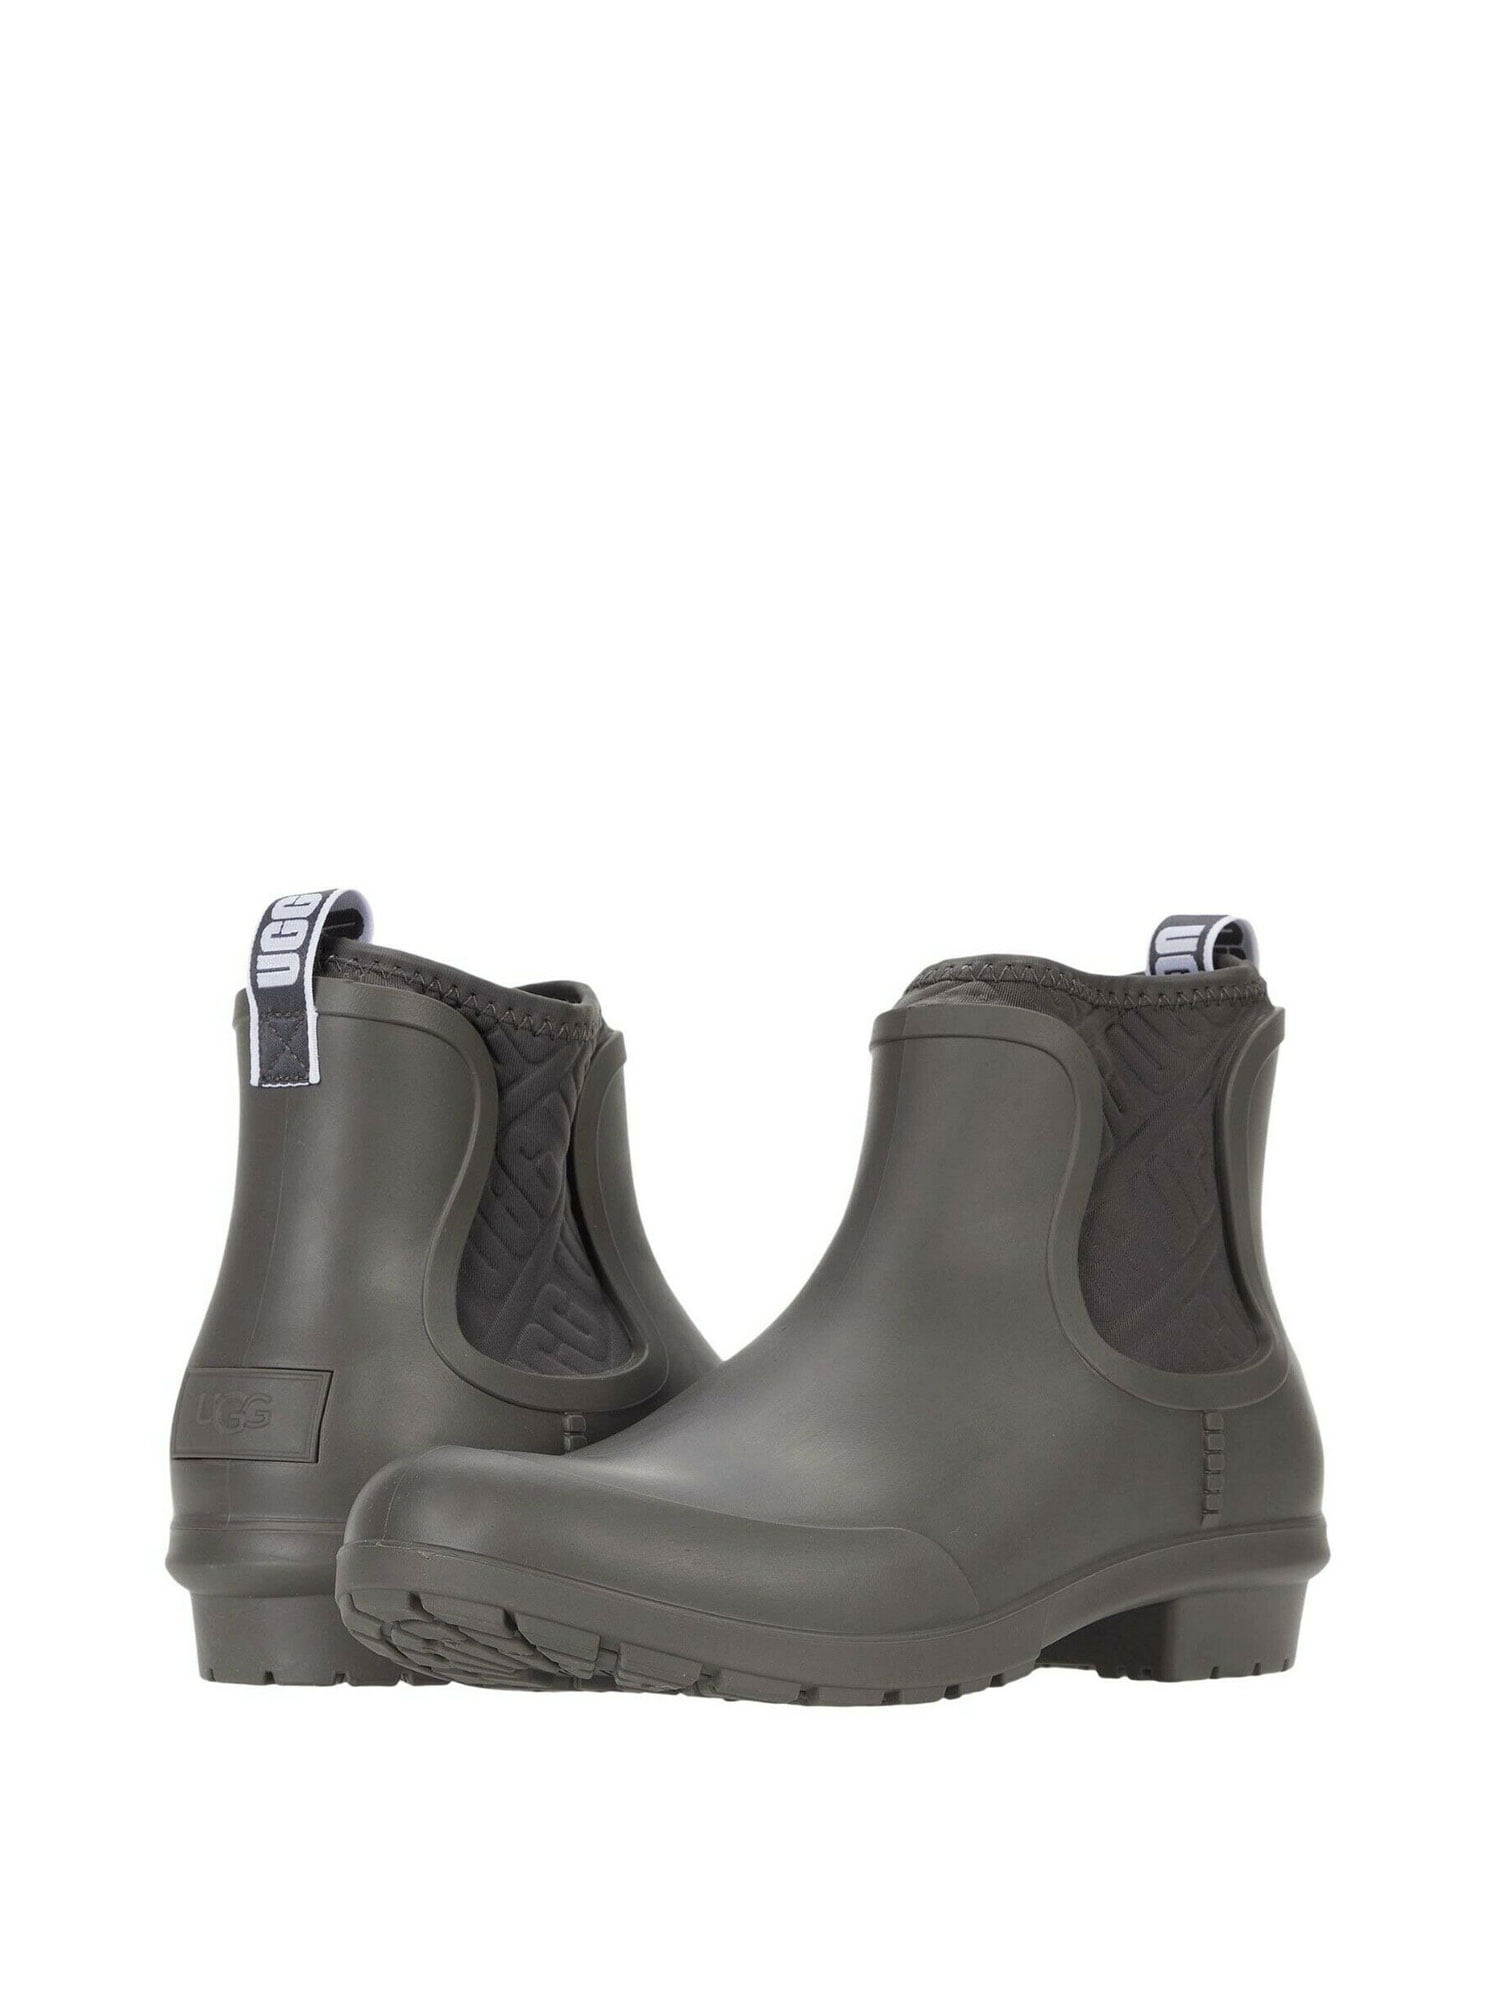 ugg waterproof rain boots